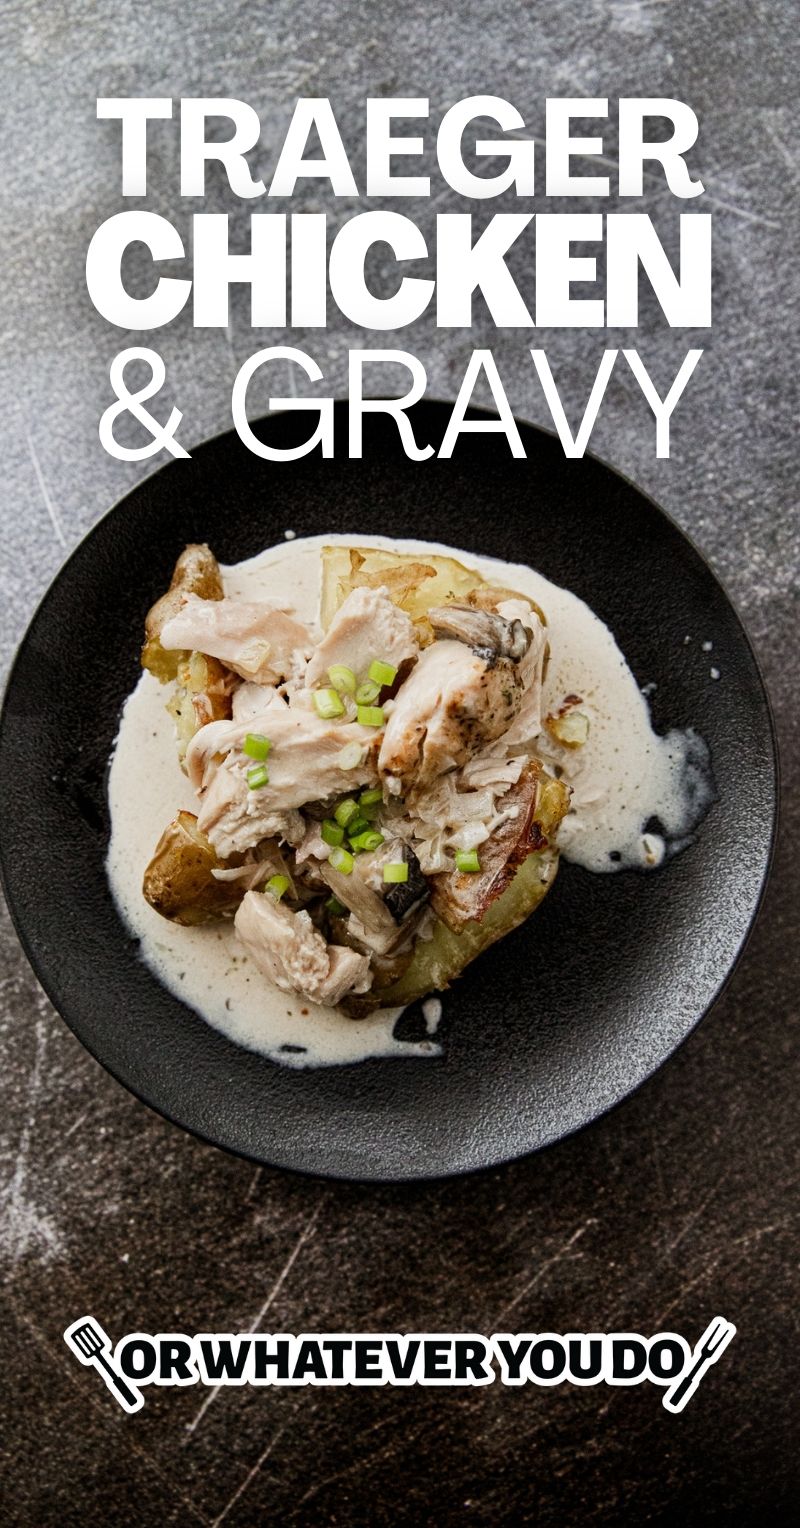 Traeger Chicken and Gravy